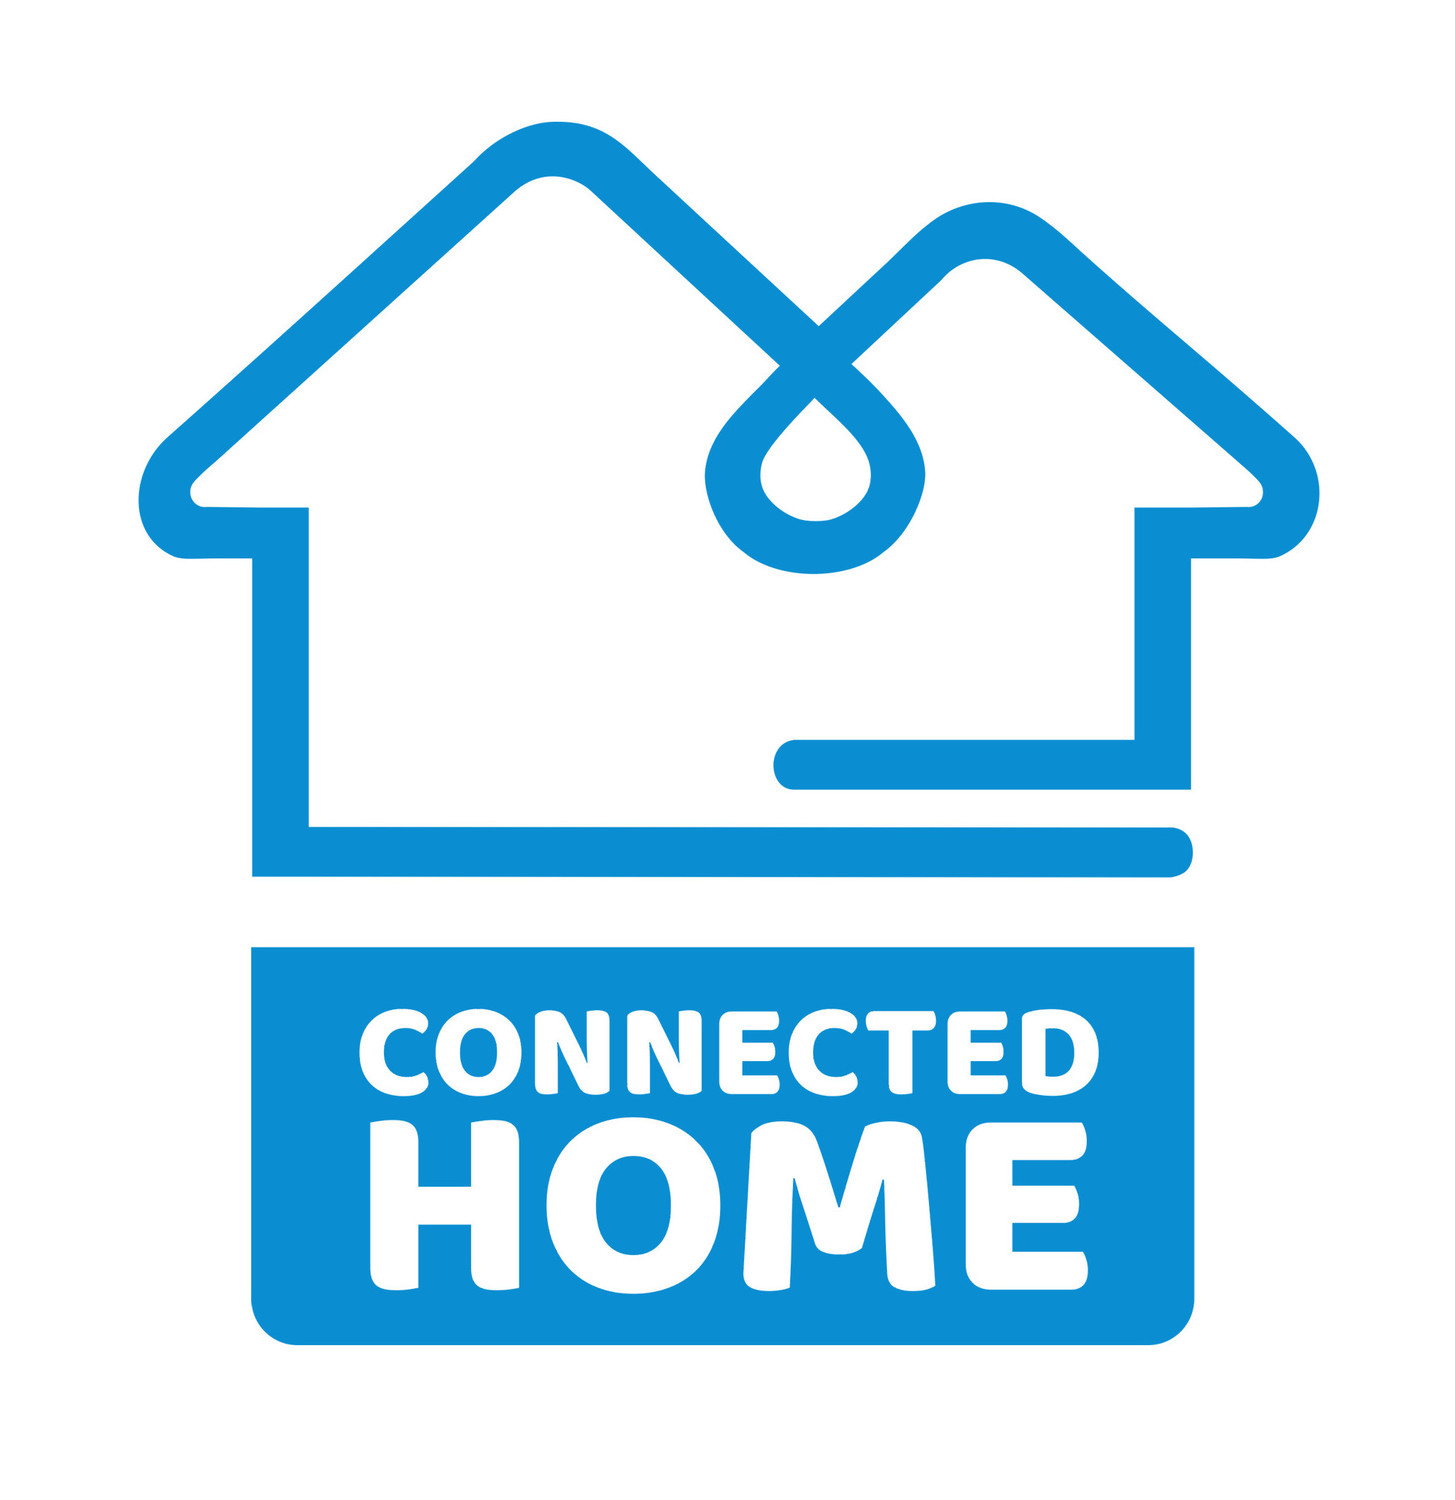 Home connections. Home connect логотип. Фирма Home. Коннектед. Наше Home.